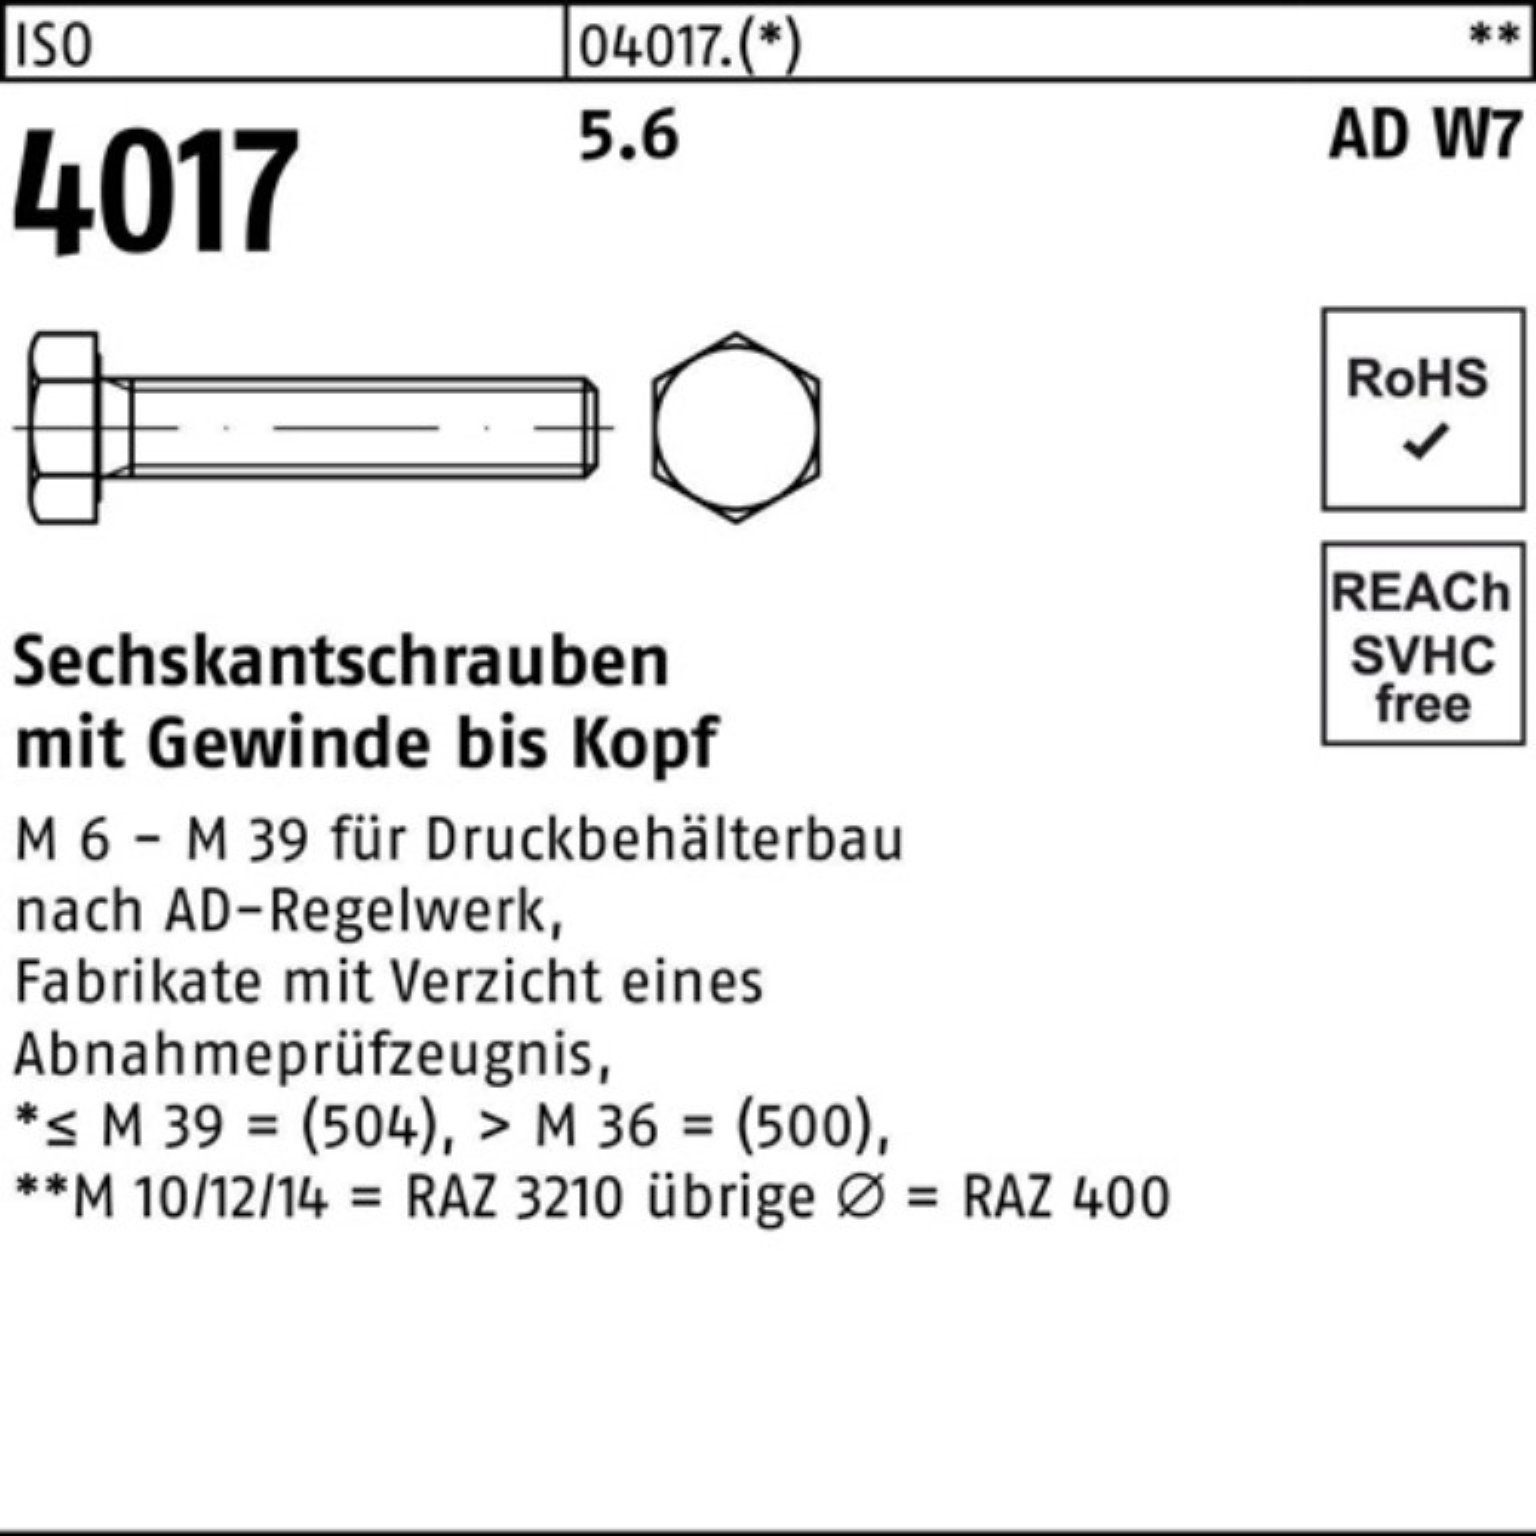 Bufab Sechskantschraube AD Pack 50 100 VG W7 100er 4017 ISO 5.6 Stück M12x Sechskantschraube